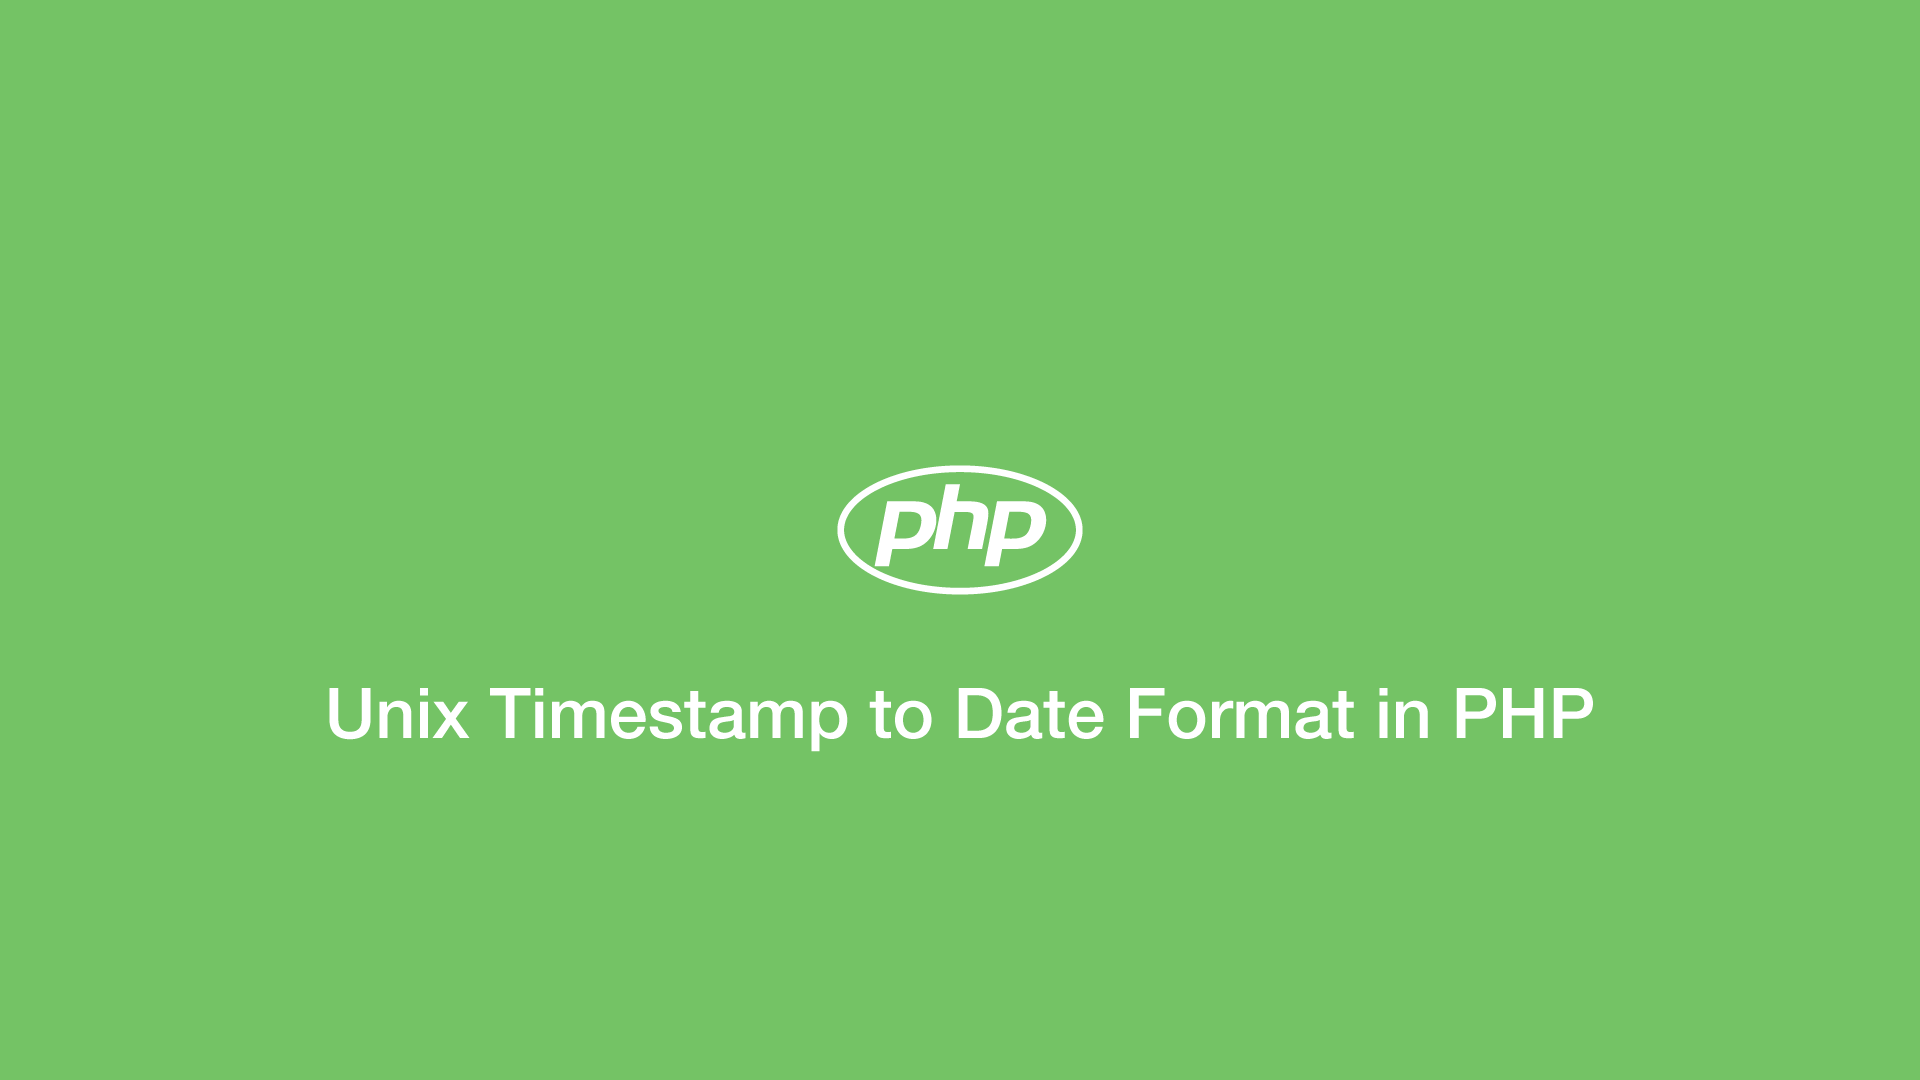 Unix timestamp. Datetime compare